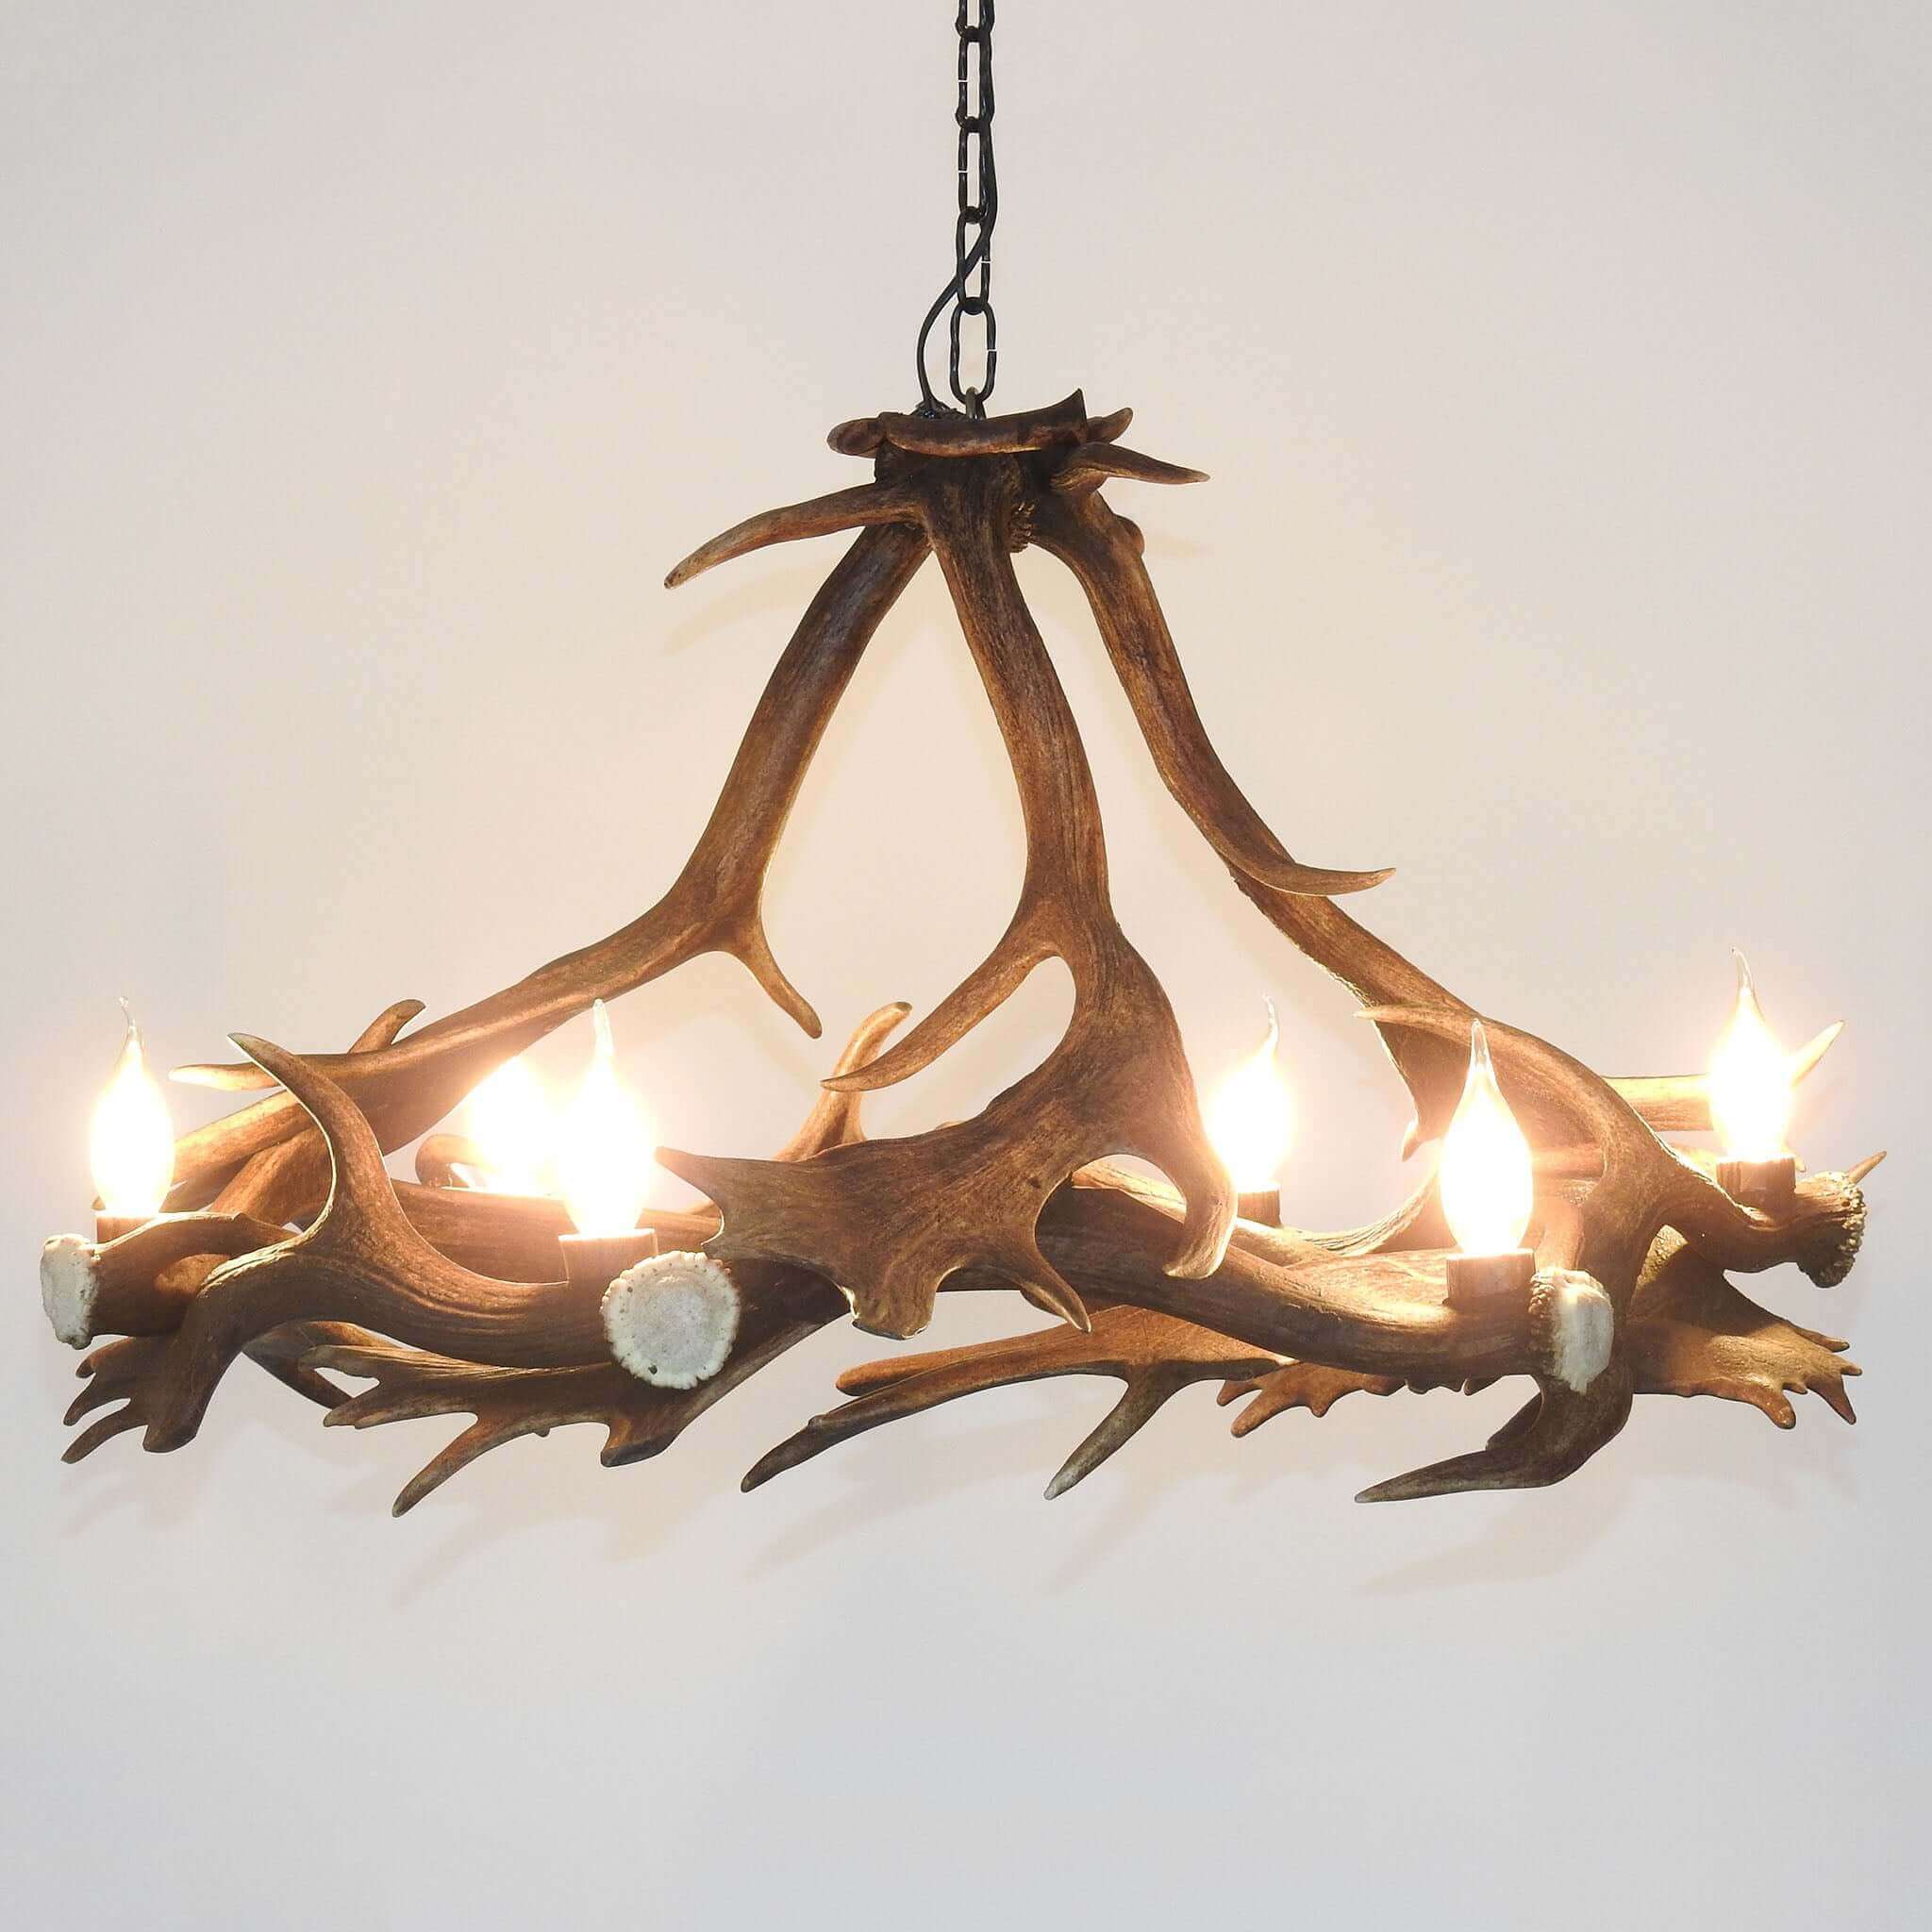 Real deer antler chandelier.